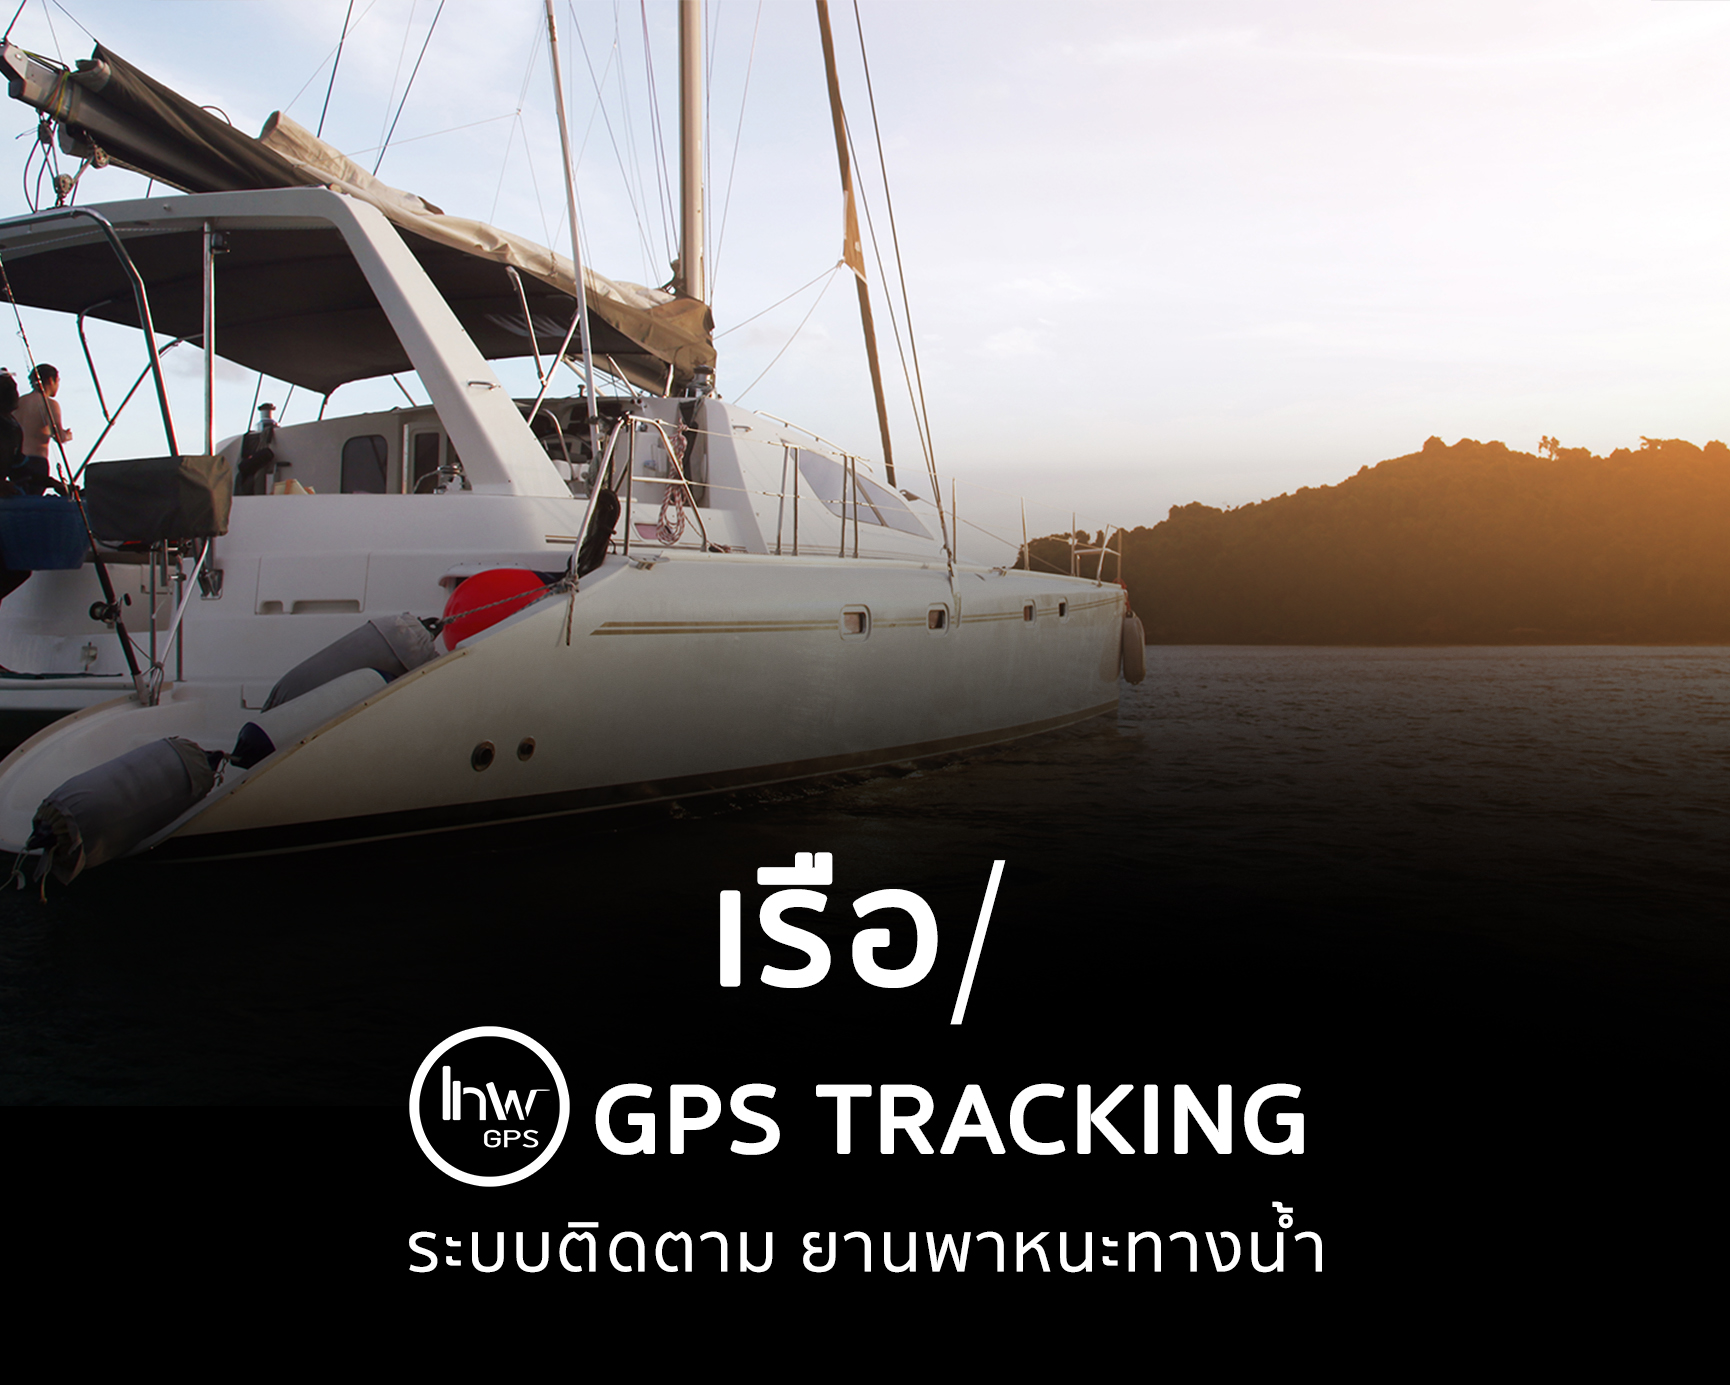 GPSติดตามเรือ GPSตามเรือ จีพีเอสตามเรือ